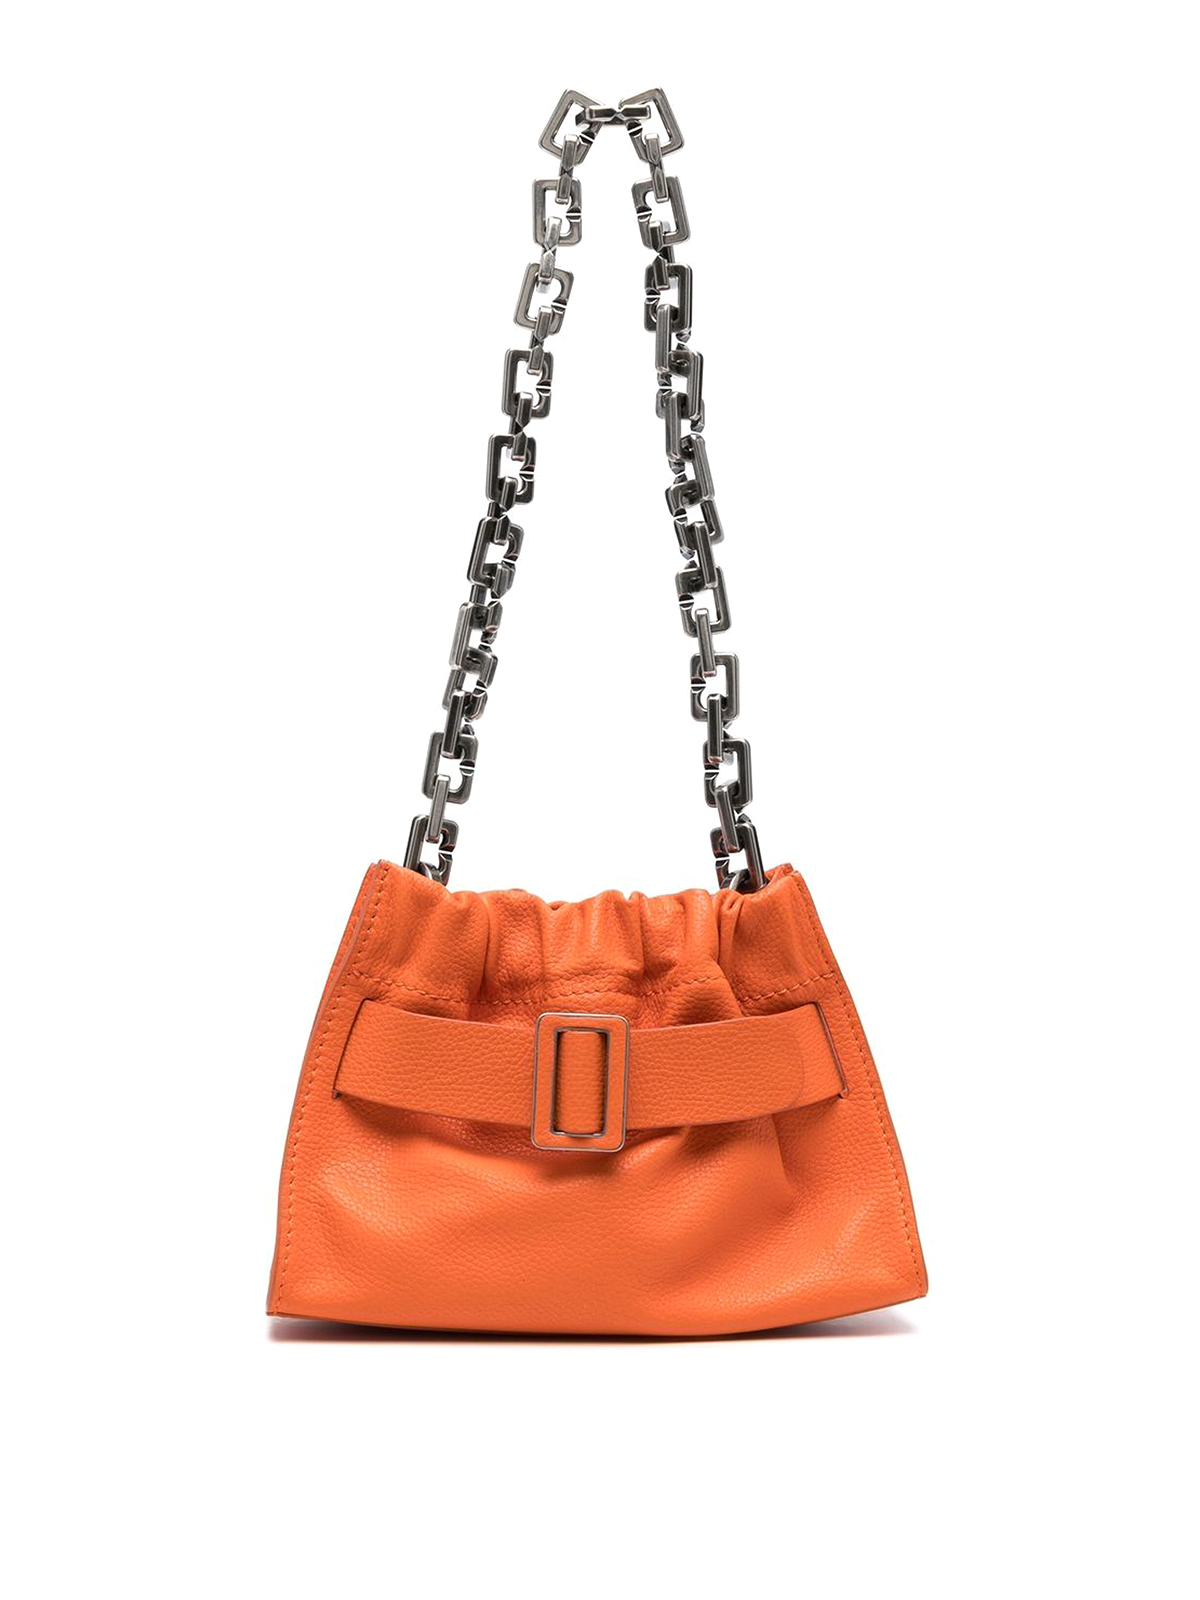 Boyy Hammered Leather Shoulder Bag With Buckle In Orange